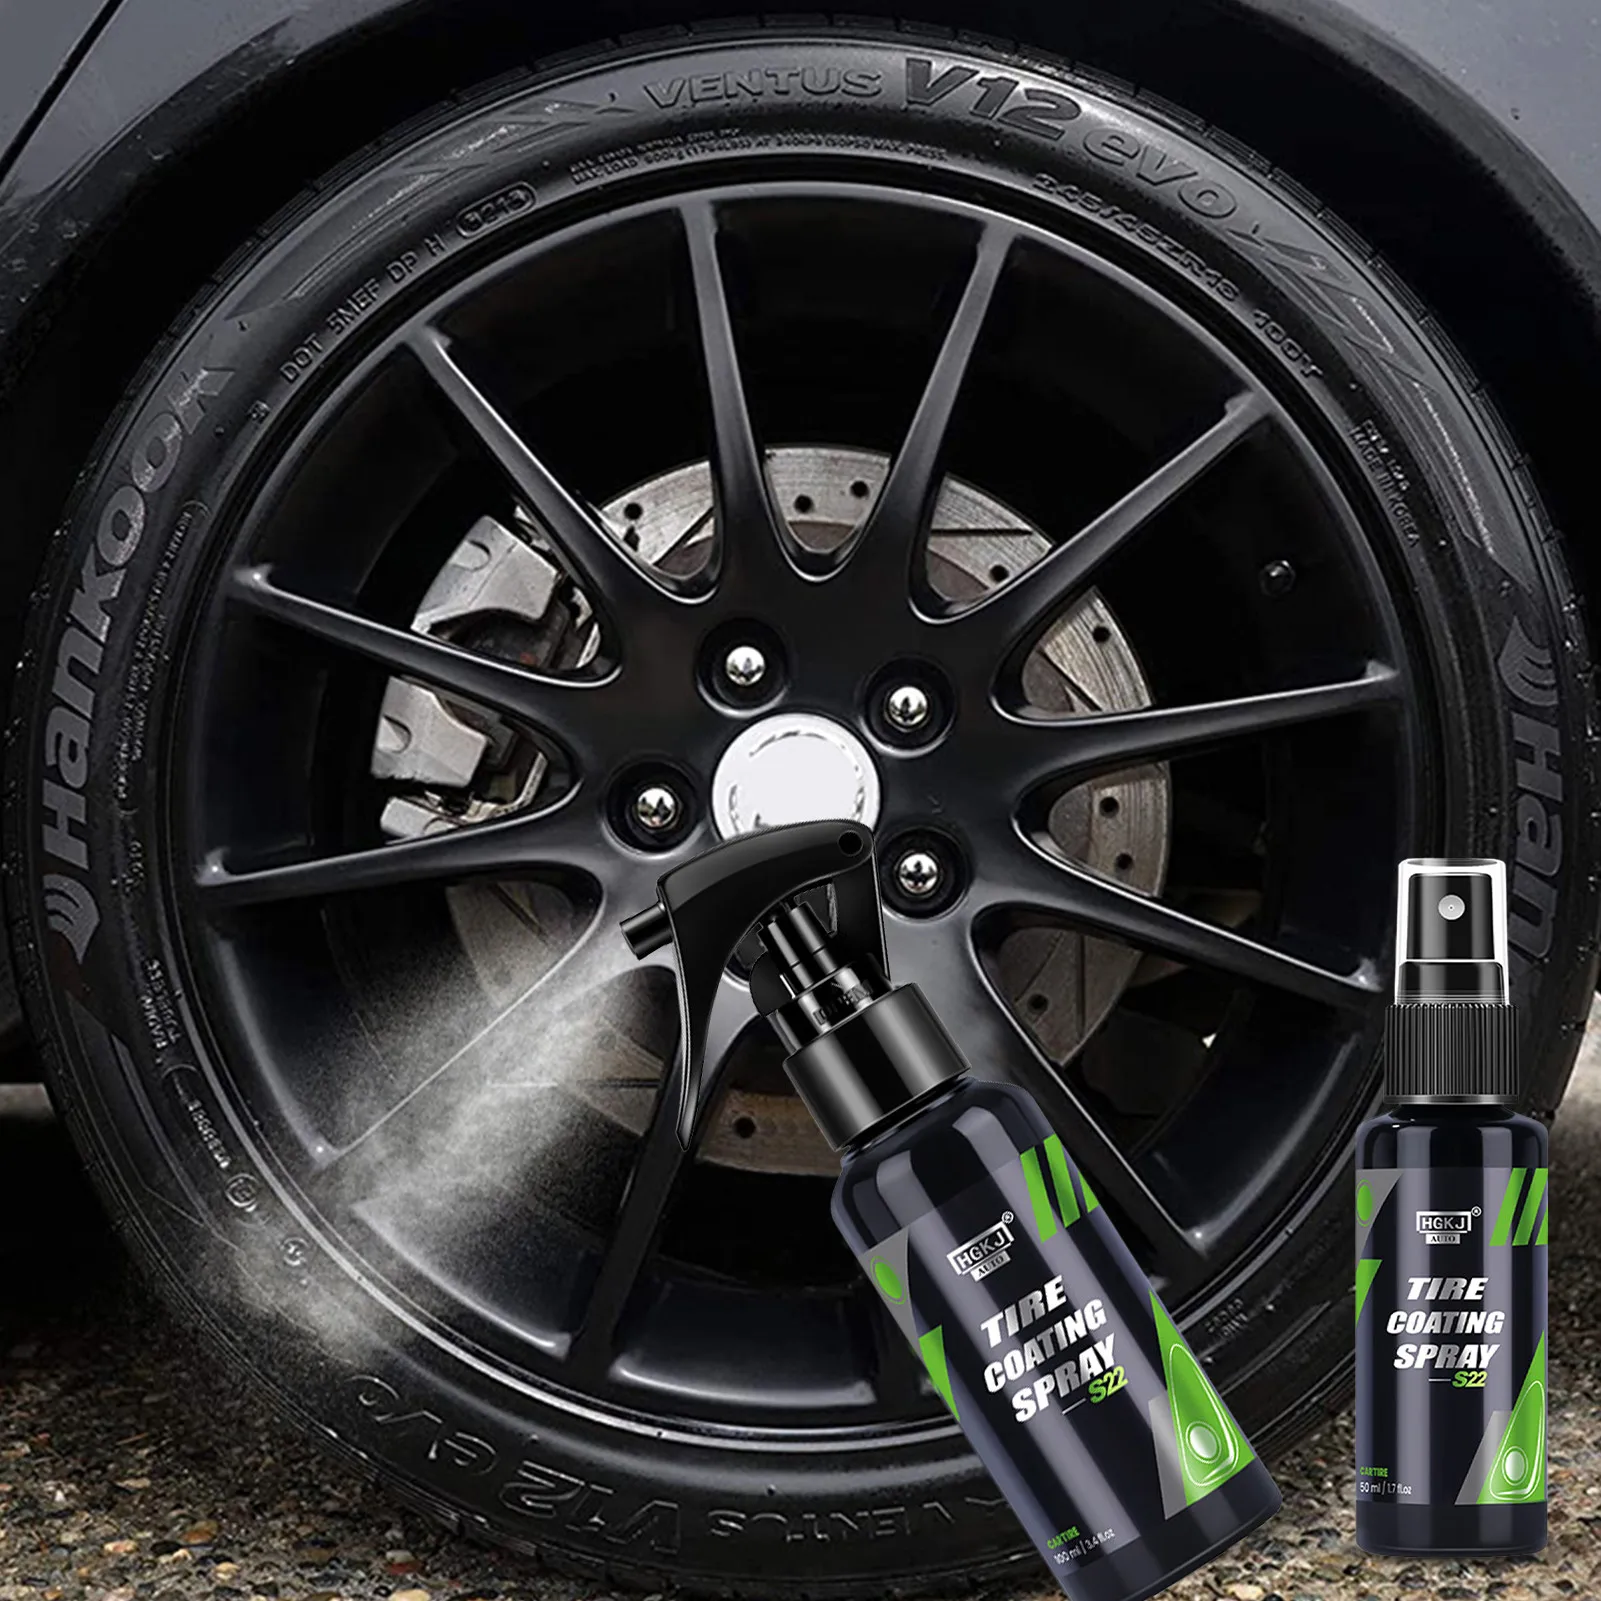 Spray Shine For Cars Long-Lasting Shine Formula Care Coating Care Spray Recharge Car Ceramic Coating DIY Friendly Car Care